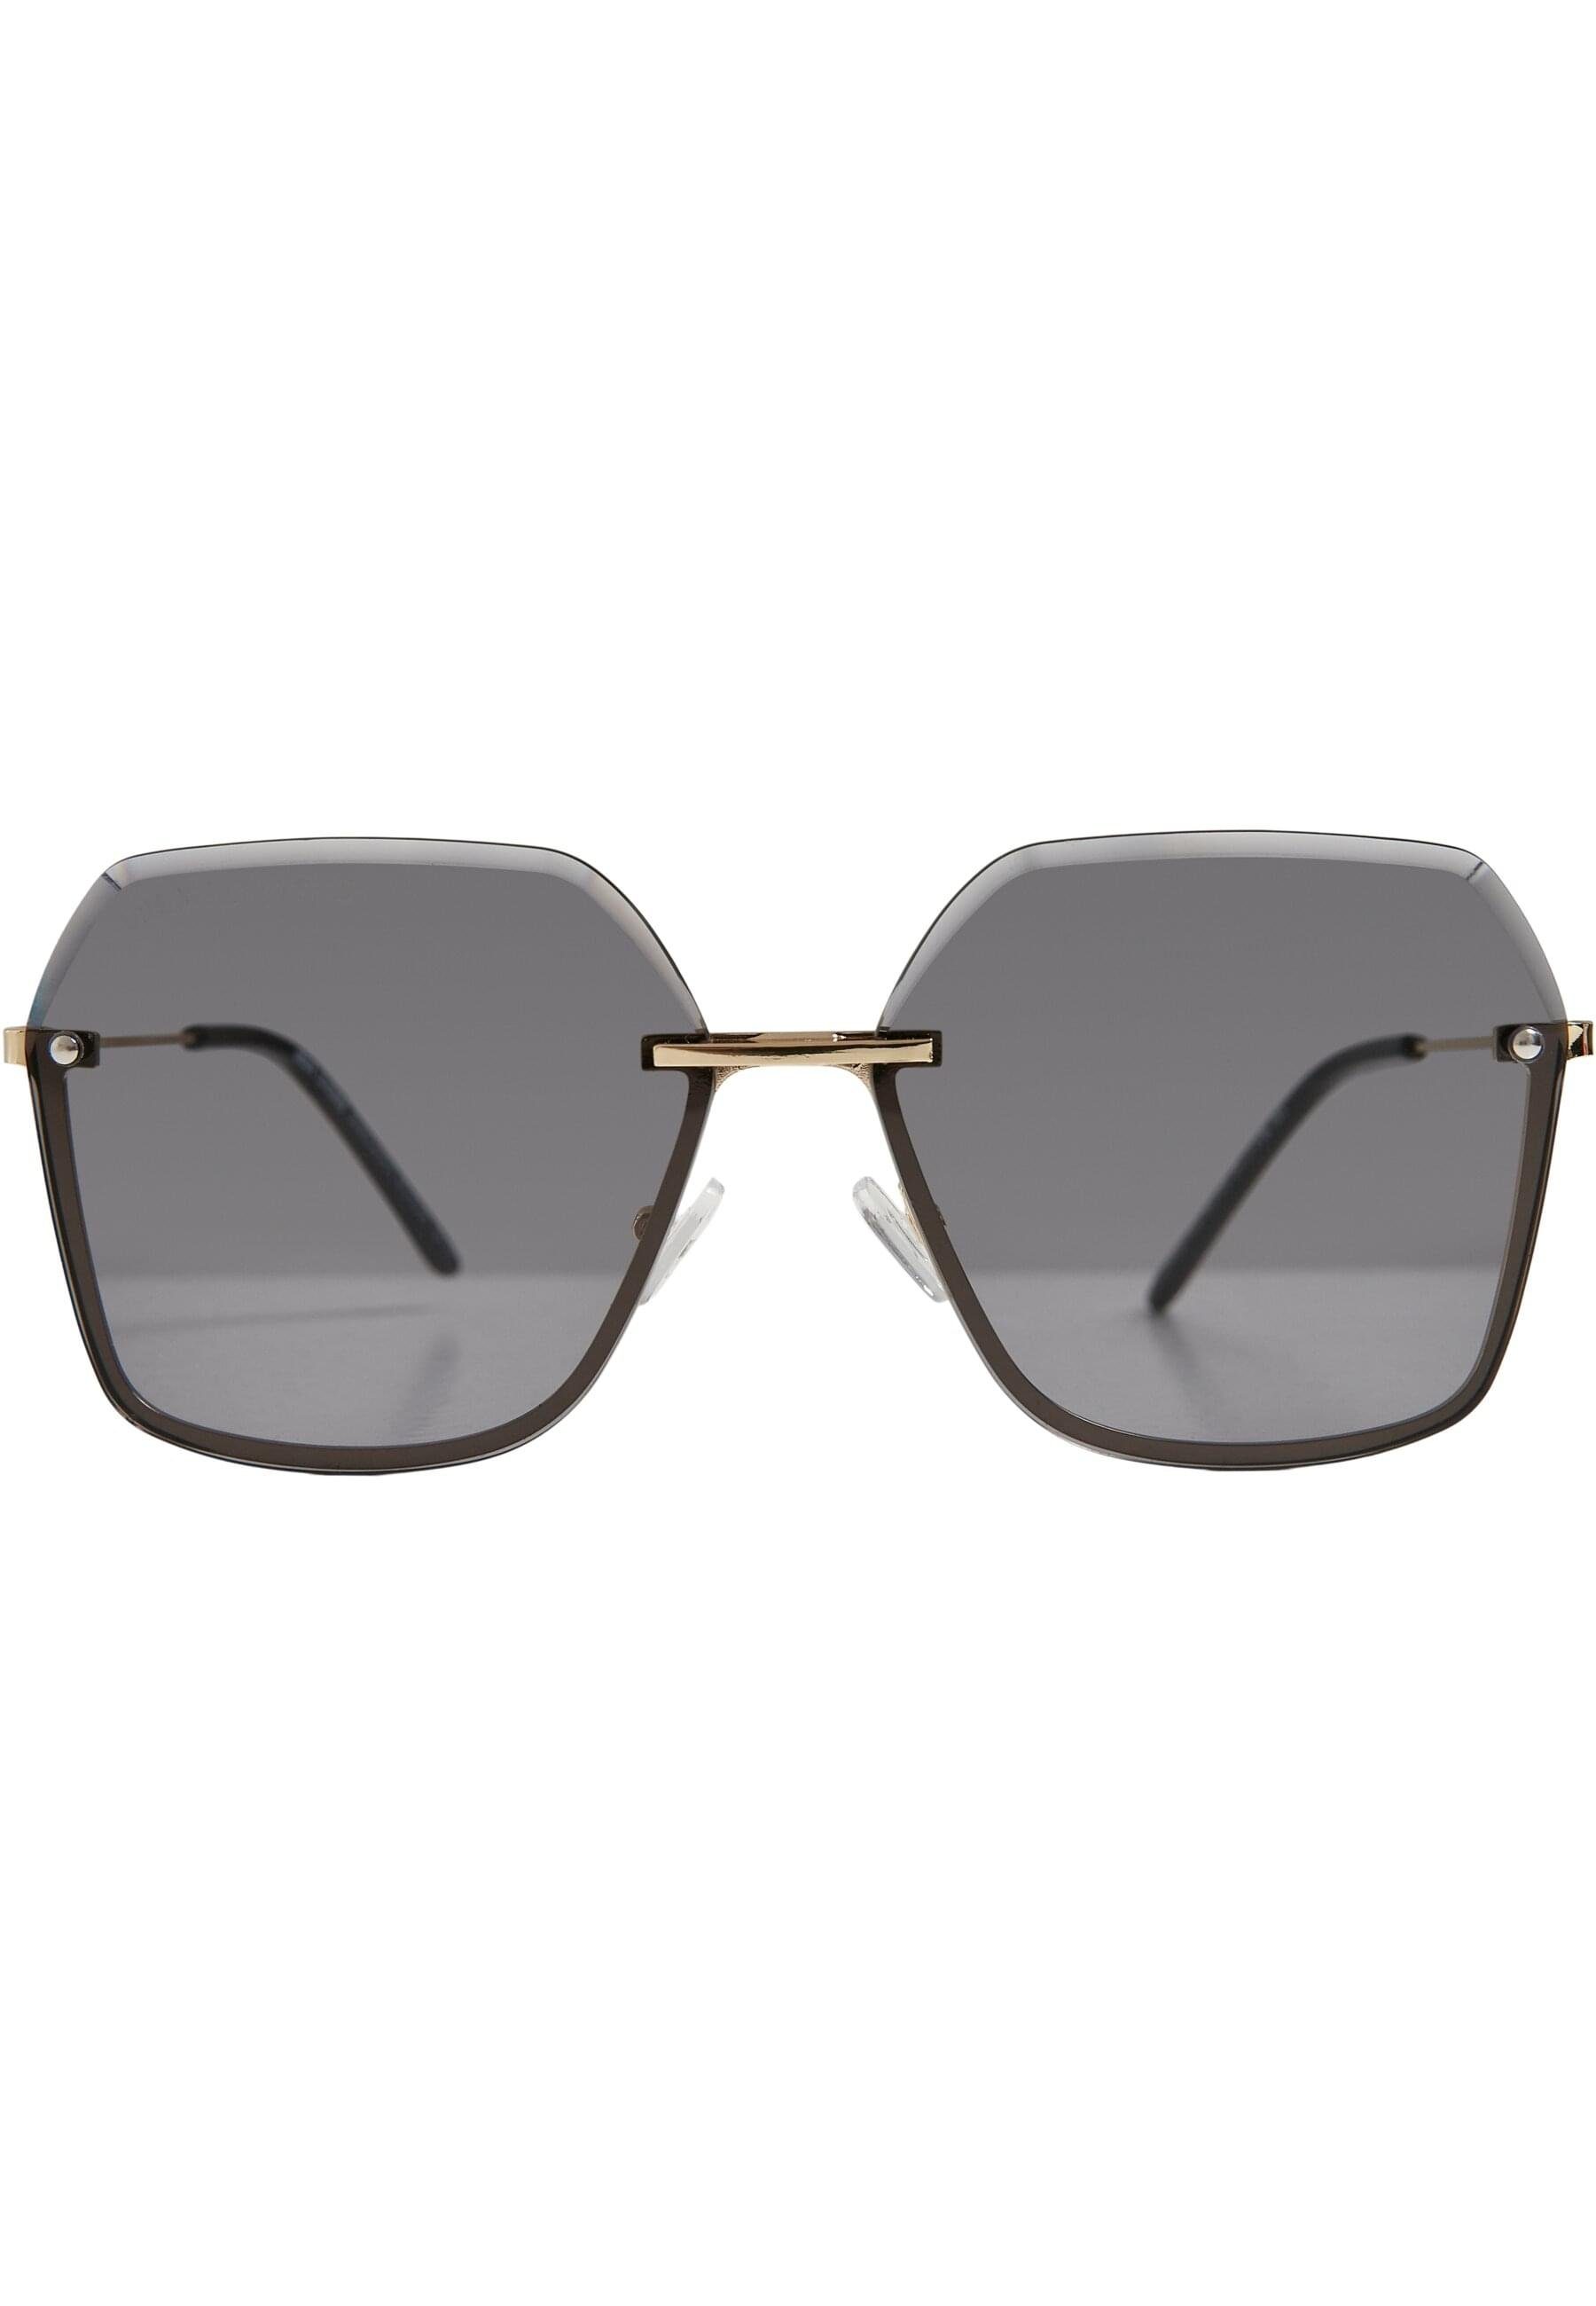 URBAN Michigan black/gold Sunglasses Unisex CLASSICS Sonnenbrille